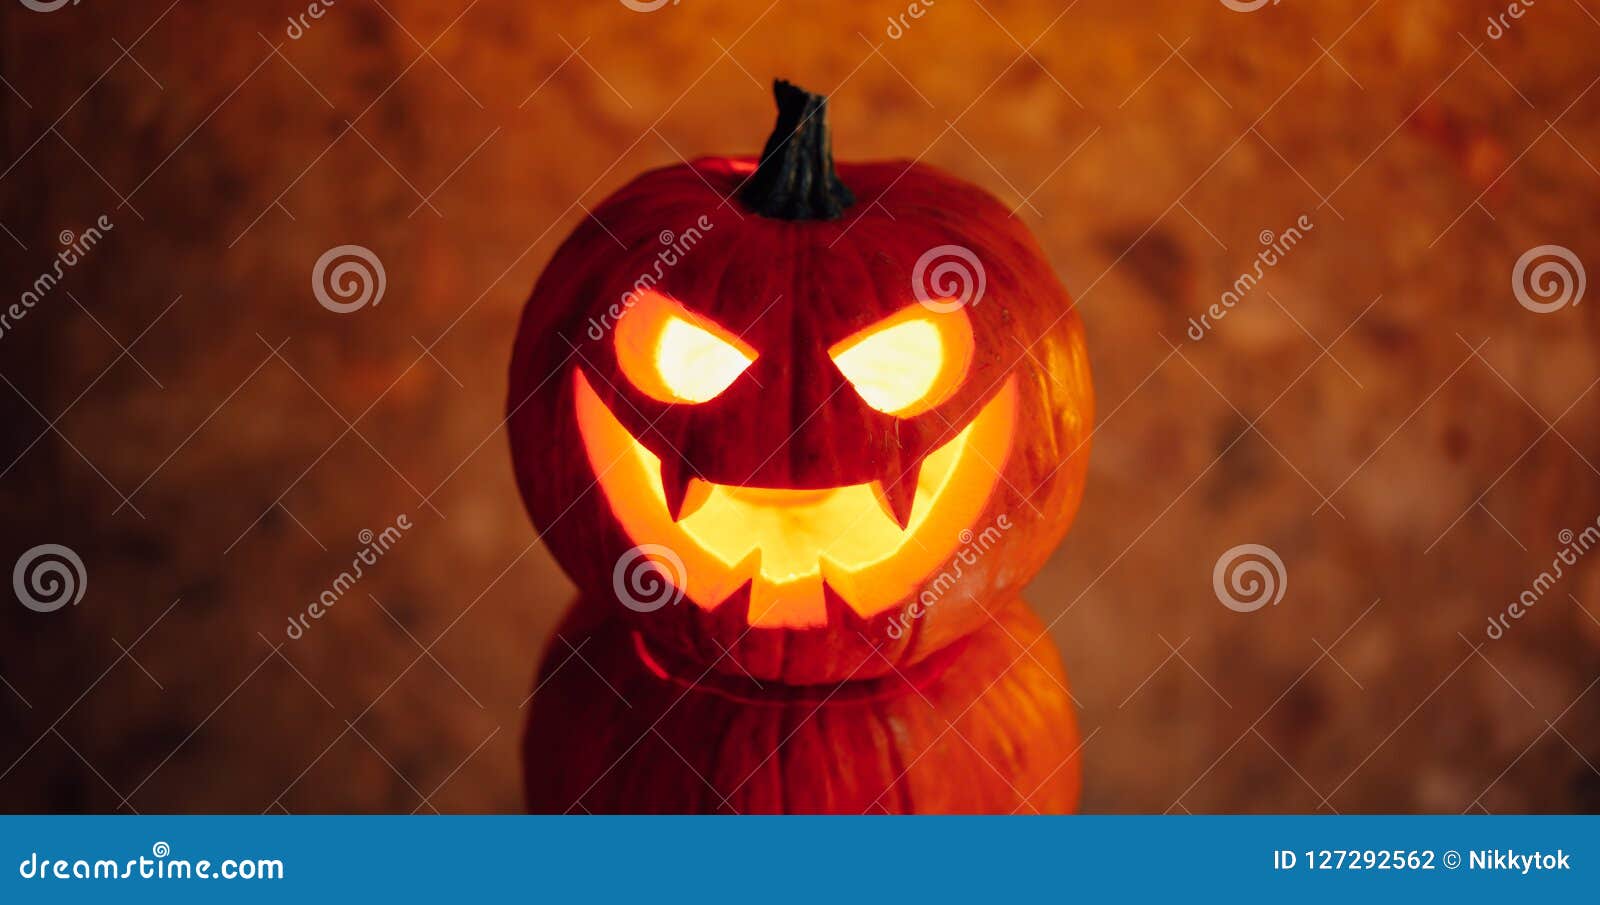 jack-o-lantern pumpkin orange light, halloween background